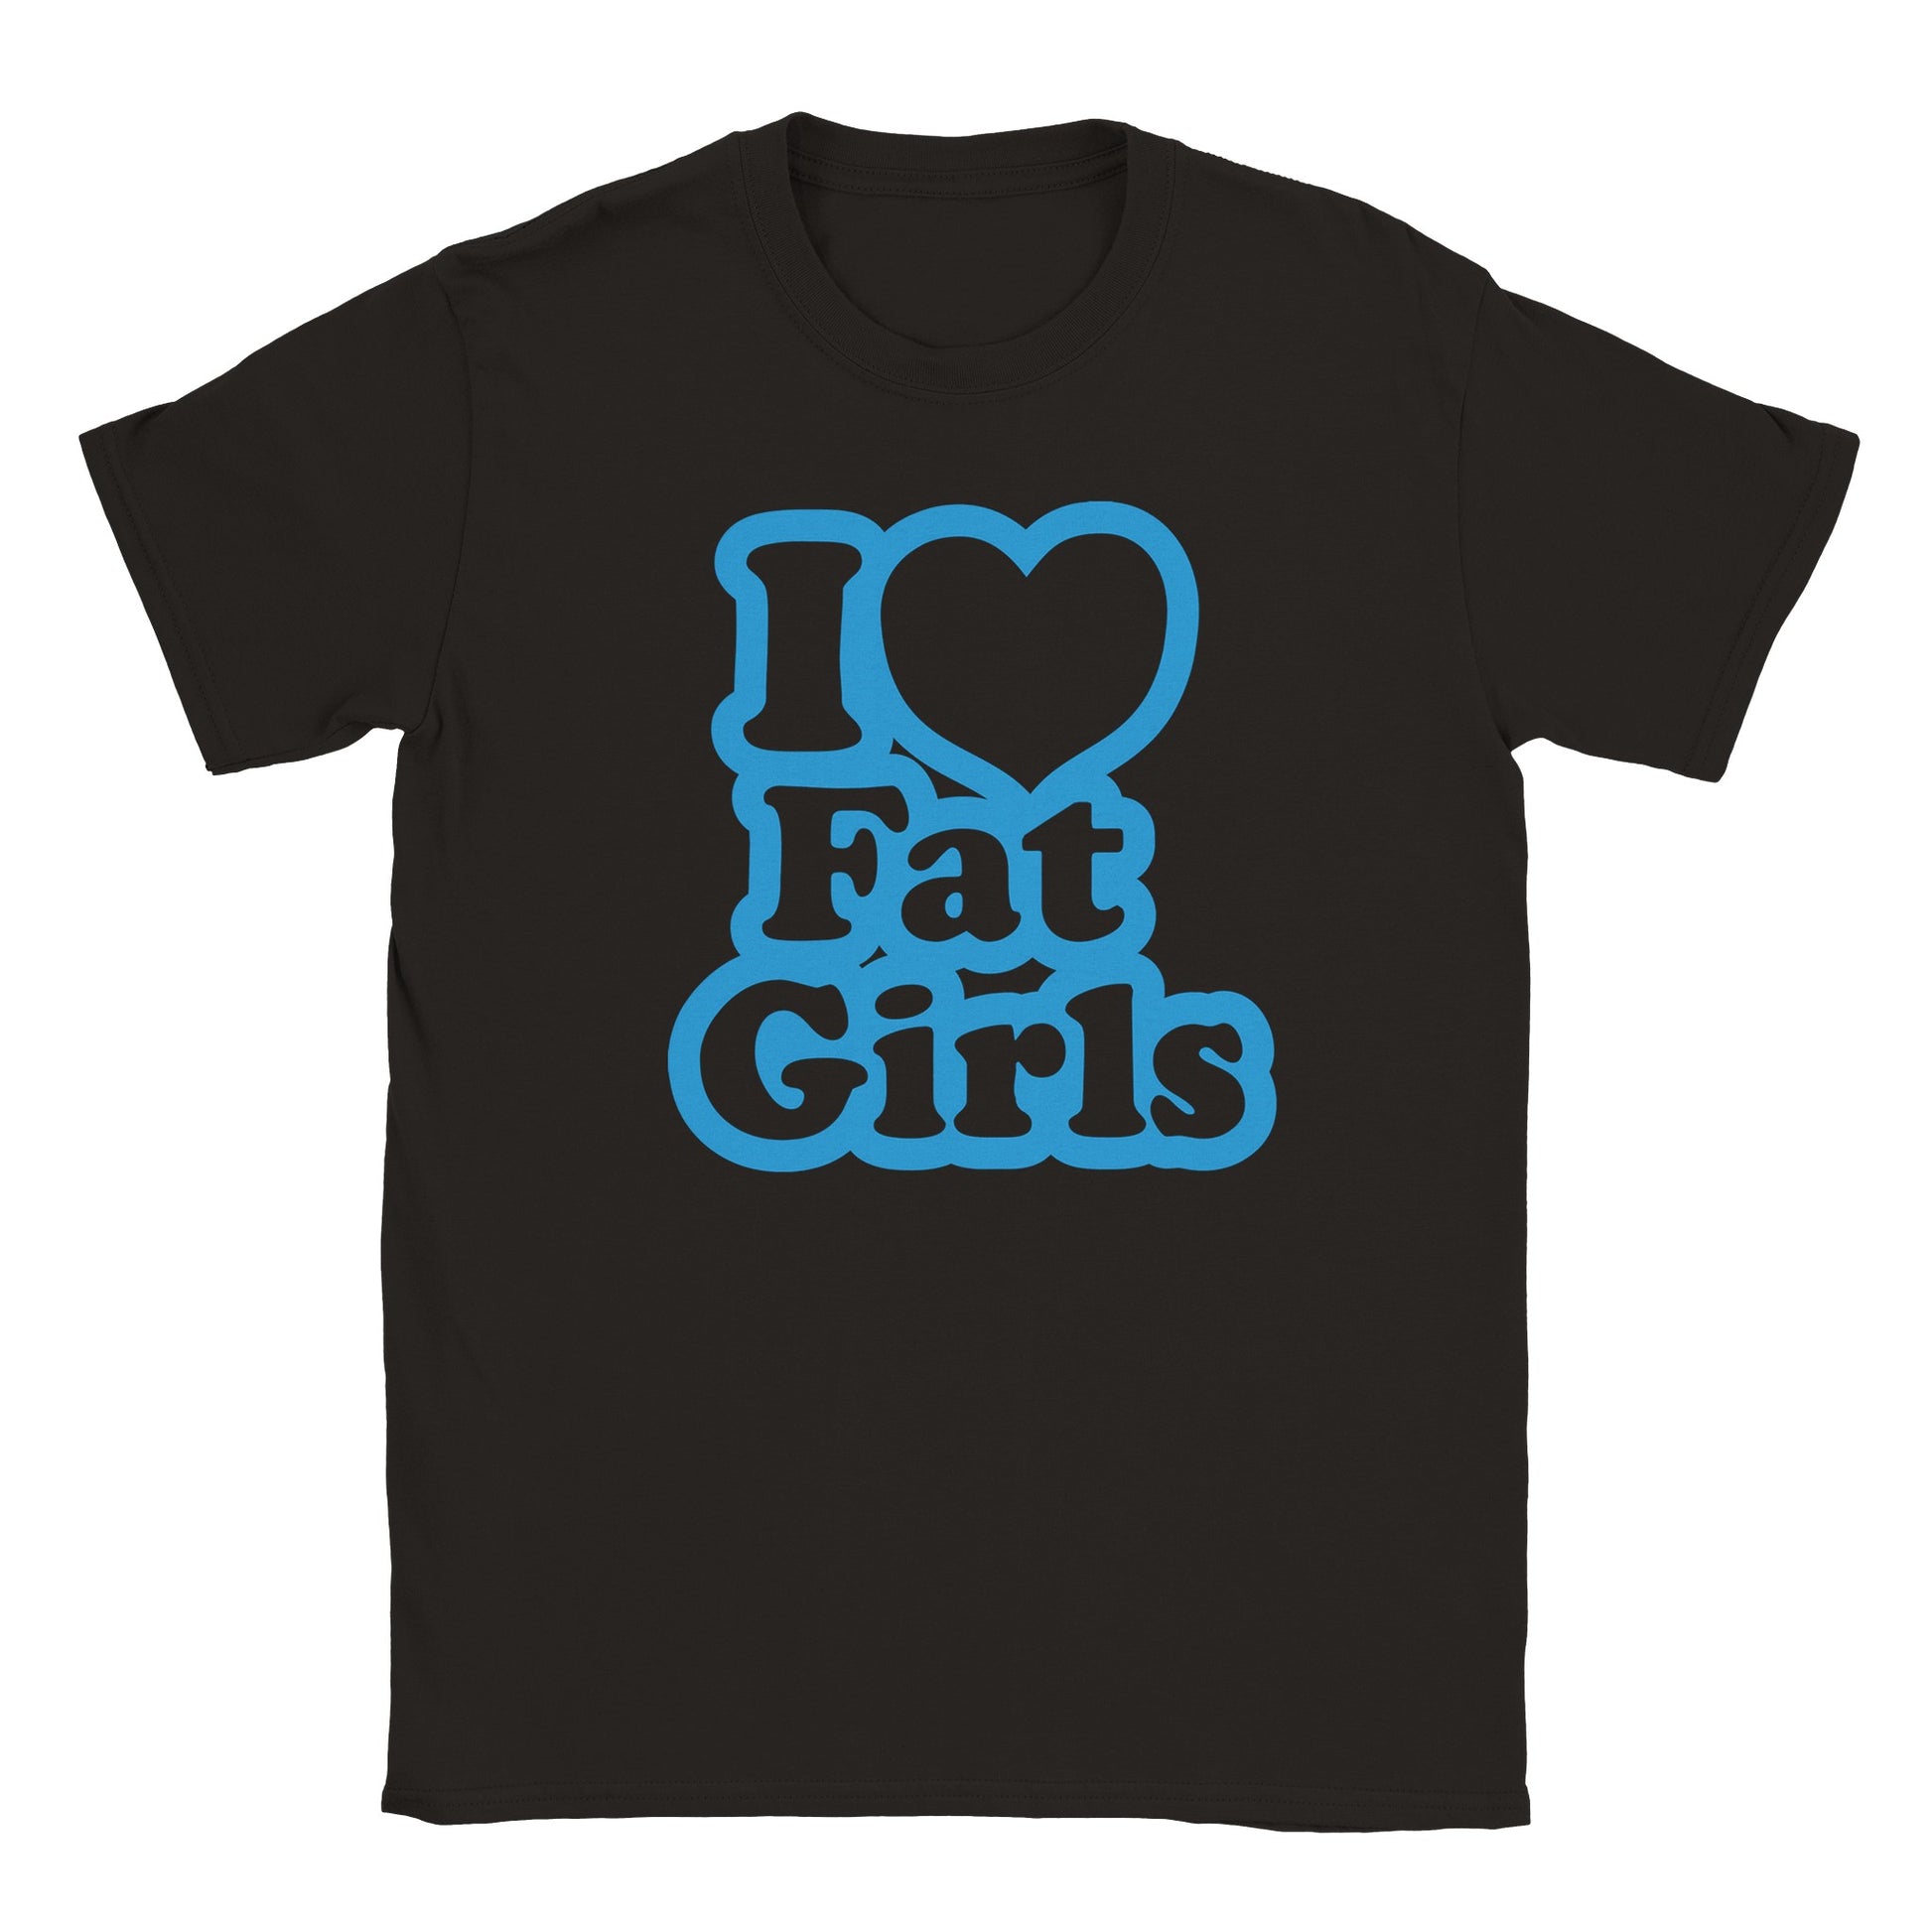 I Love Fat Girls T-shirt - Mister Snarky's